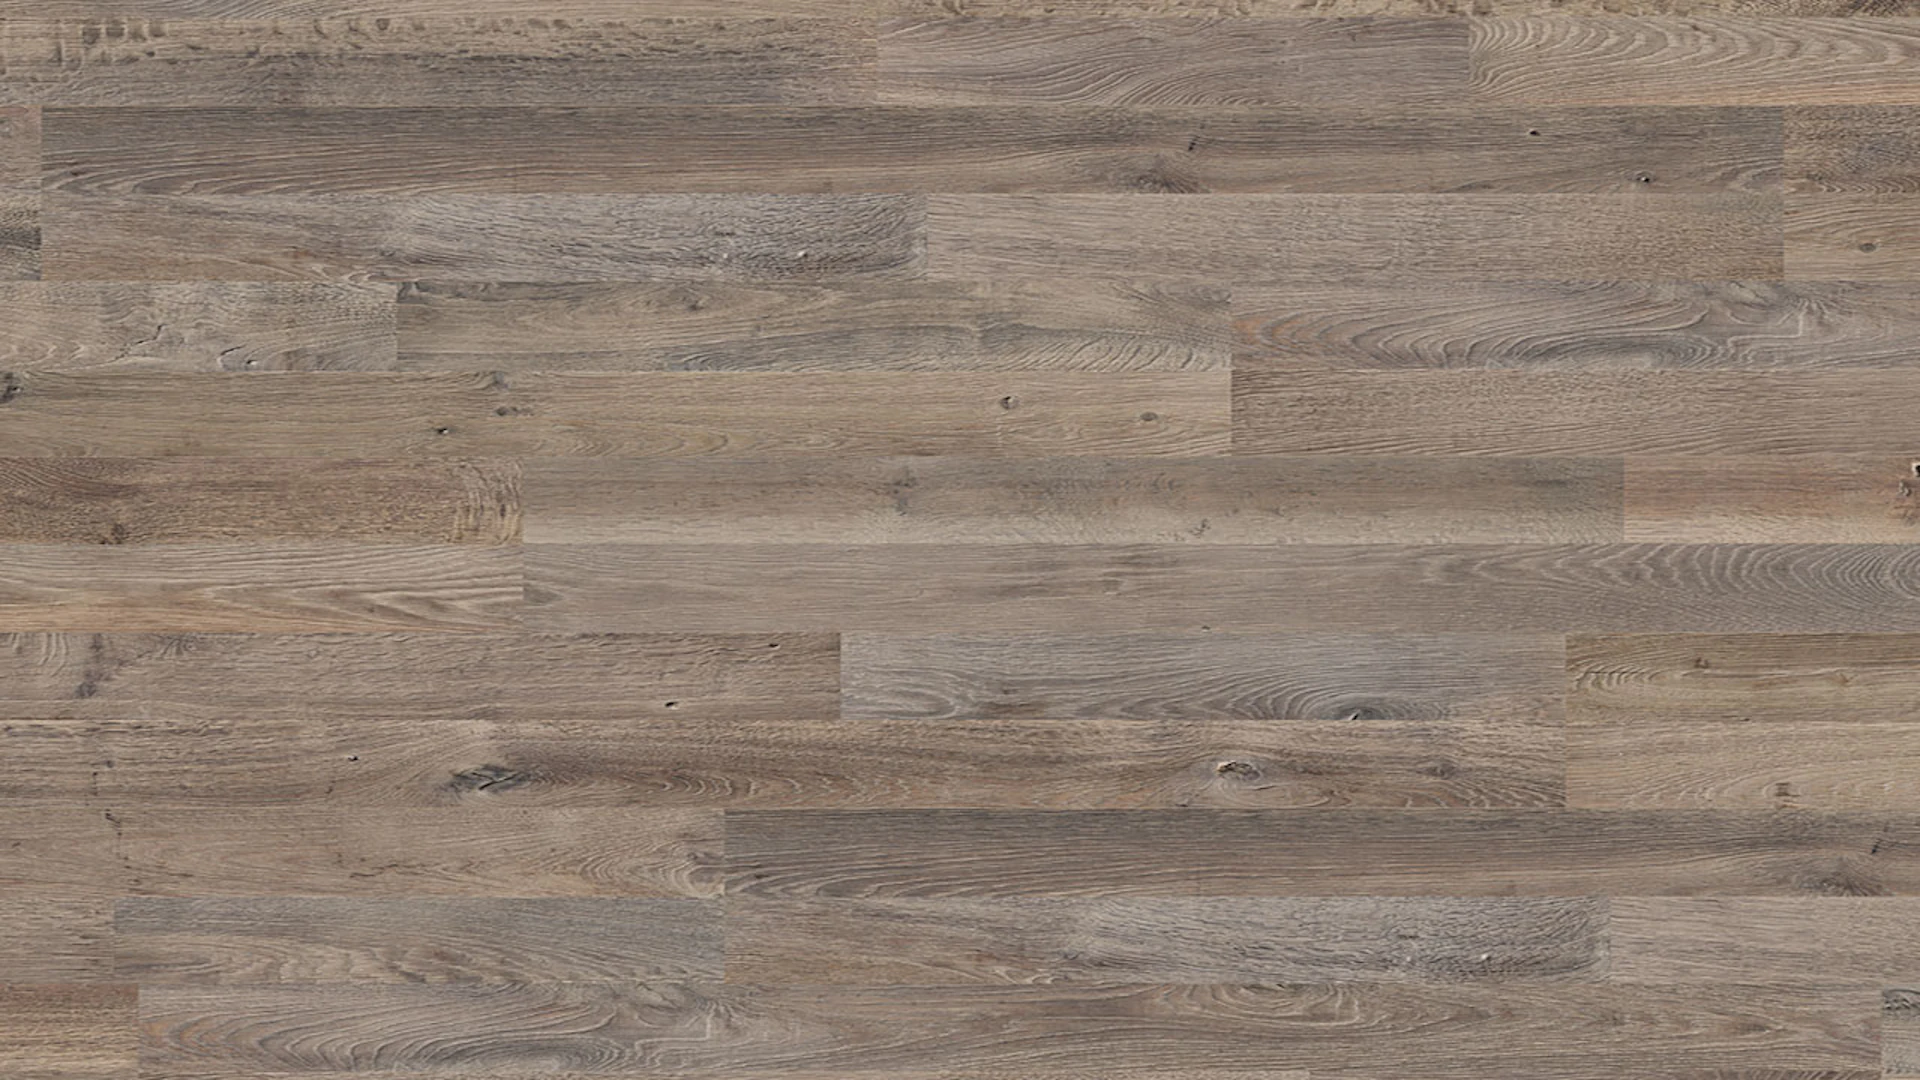 Parador laminate flooring - Classic 1050 - oak lava - matt satin structure - 2-plank block